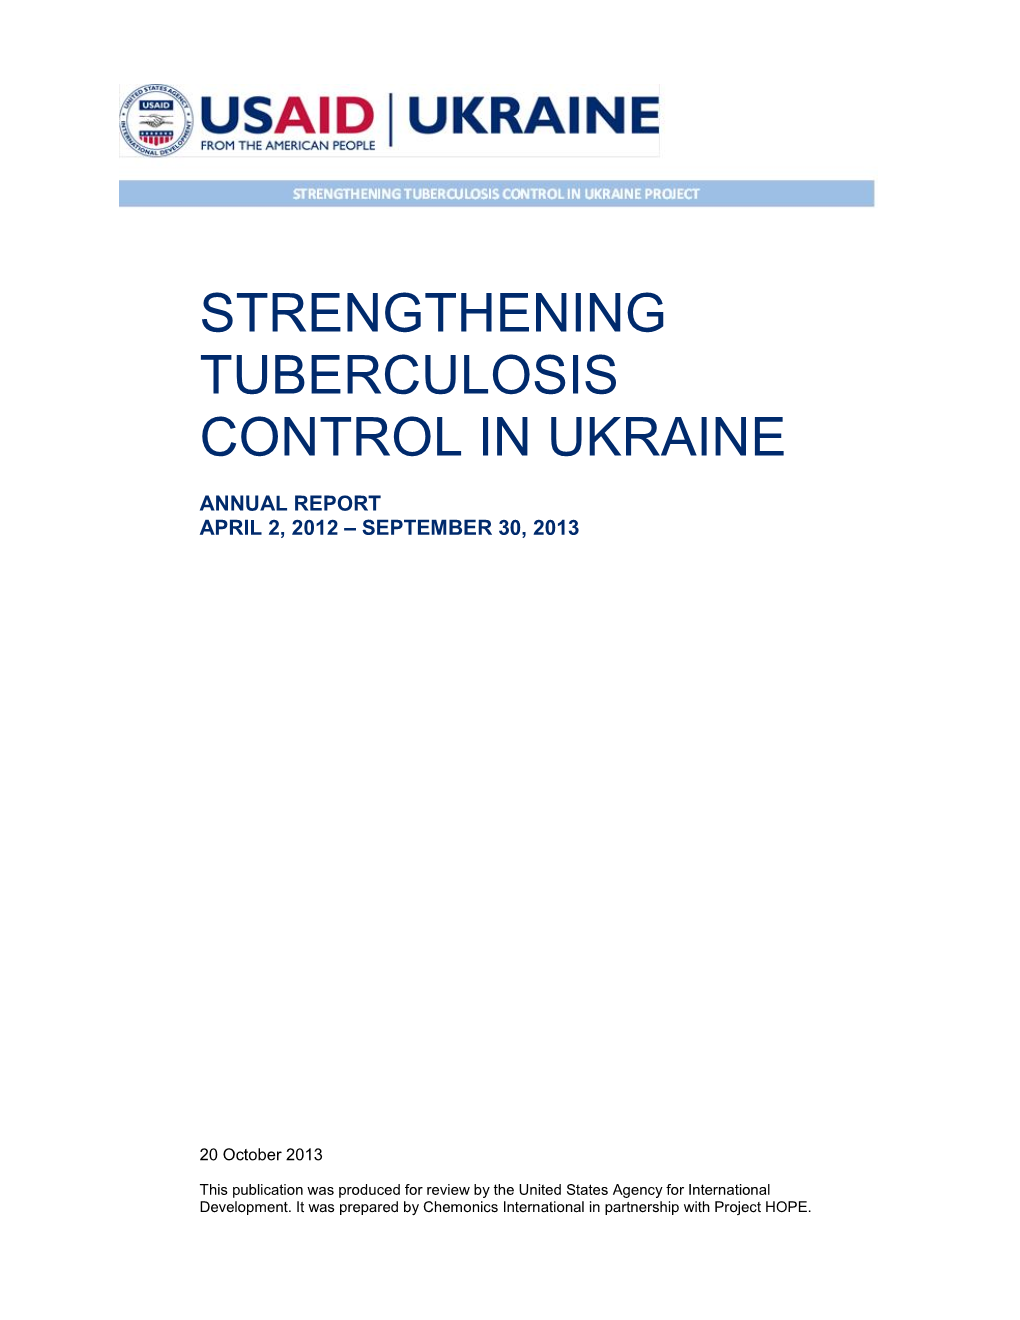 STRENGTHENING TUBERCULOSIS CONTROL in UKRAINE: ANNUAL REPORT V